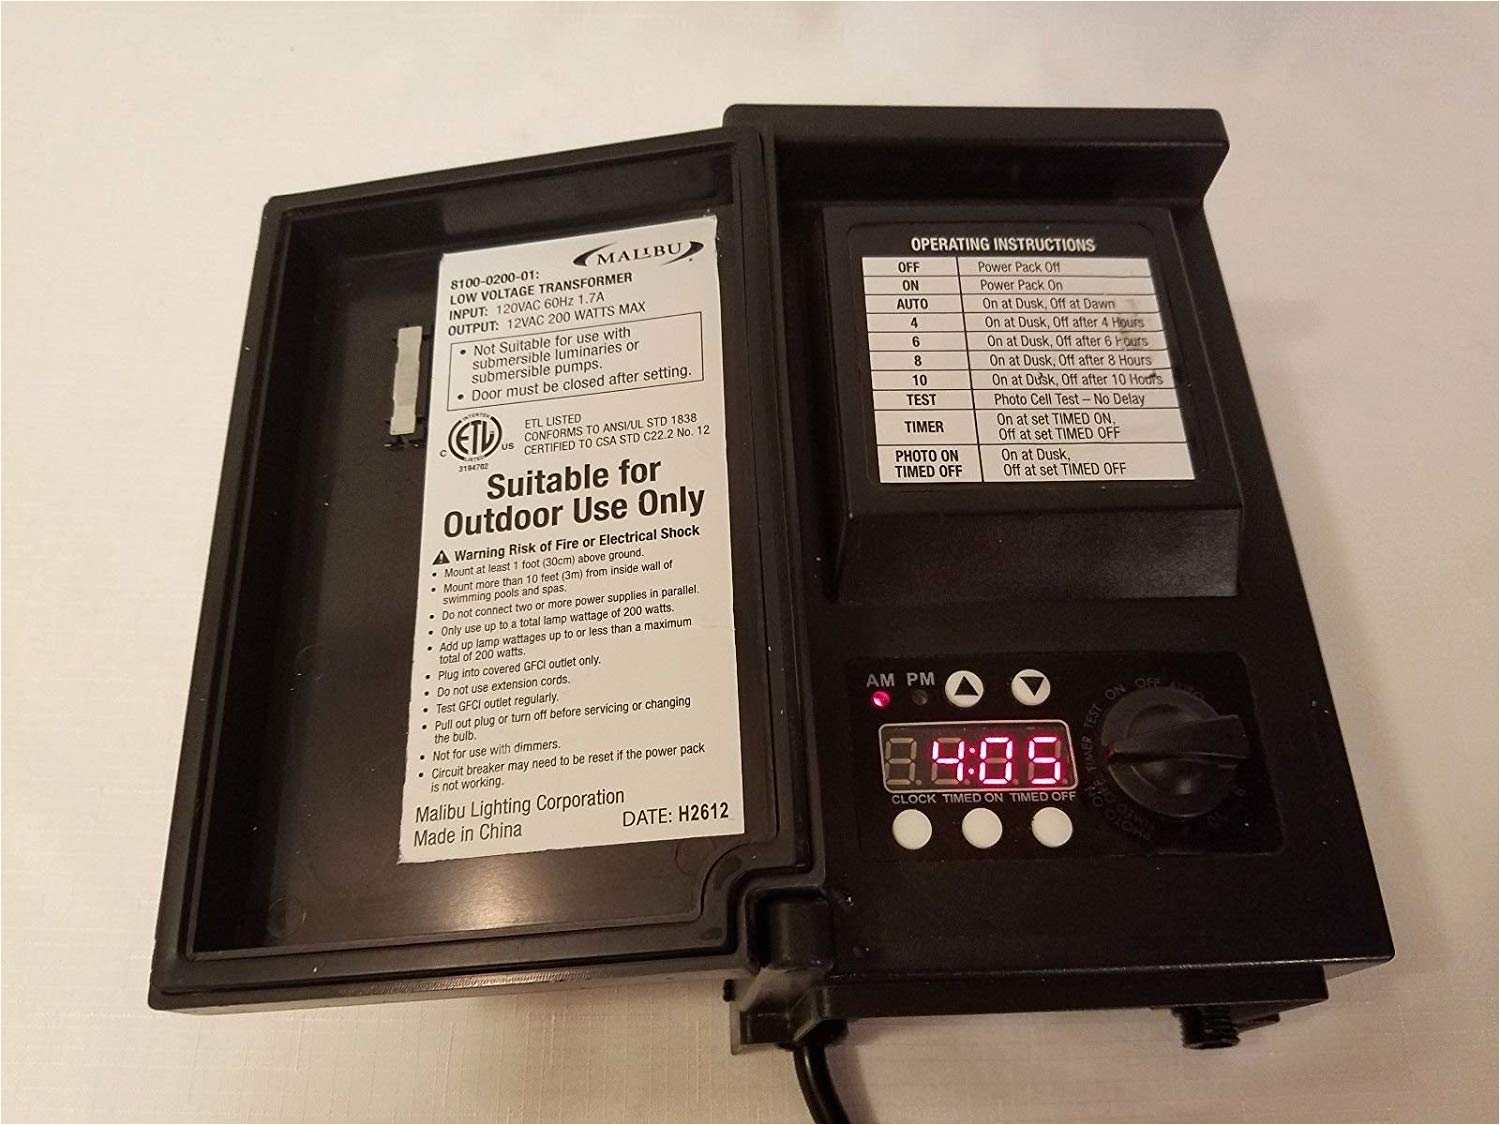 malibu led 200 watt low voltage transformer power pack with digital timer and photo eye amazon com